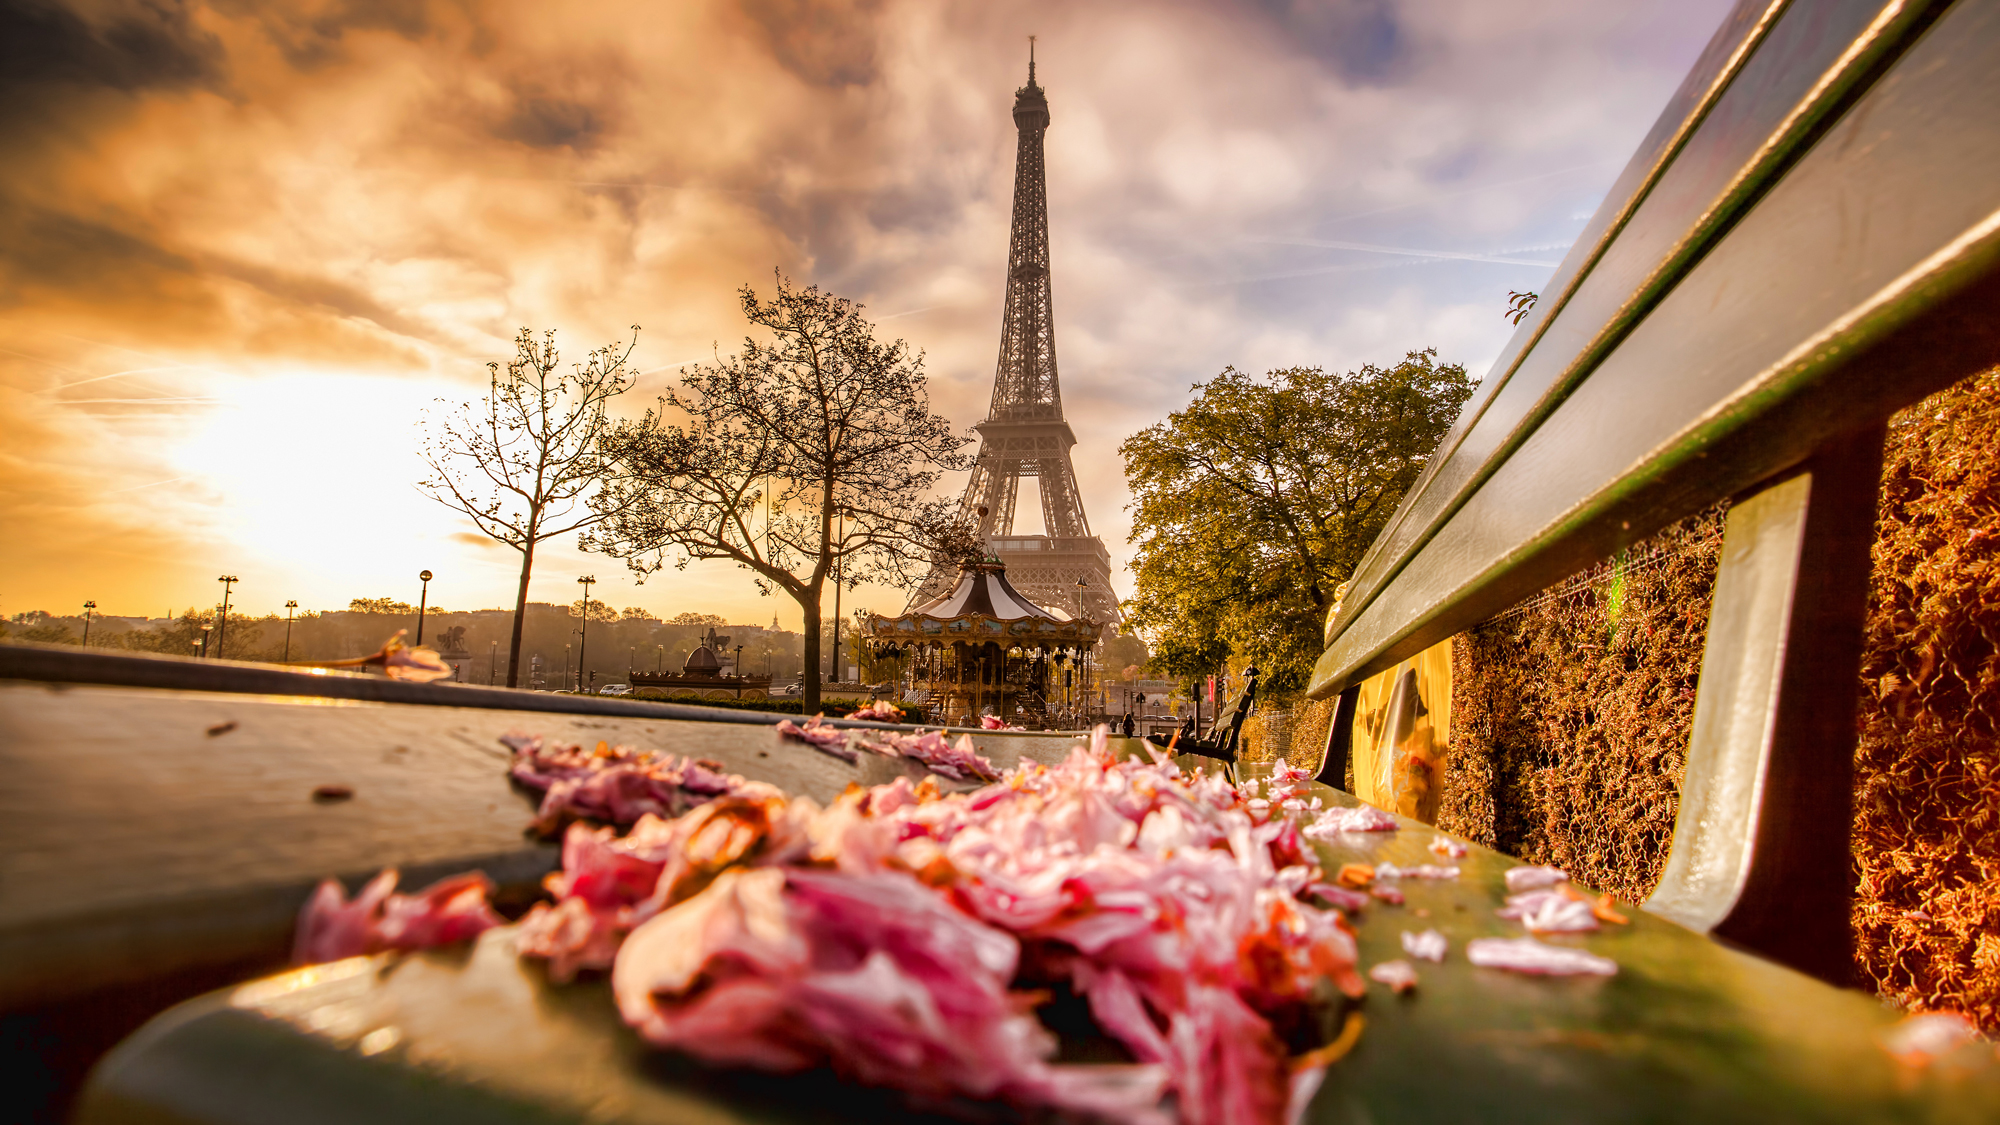 Eiffel Tower in Paris seen behind pink flower petals strewn on a bench